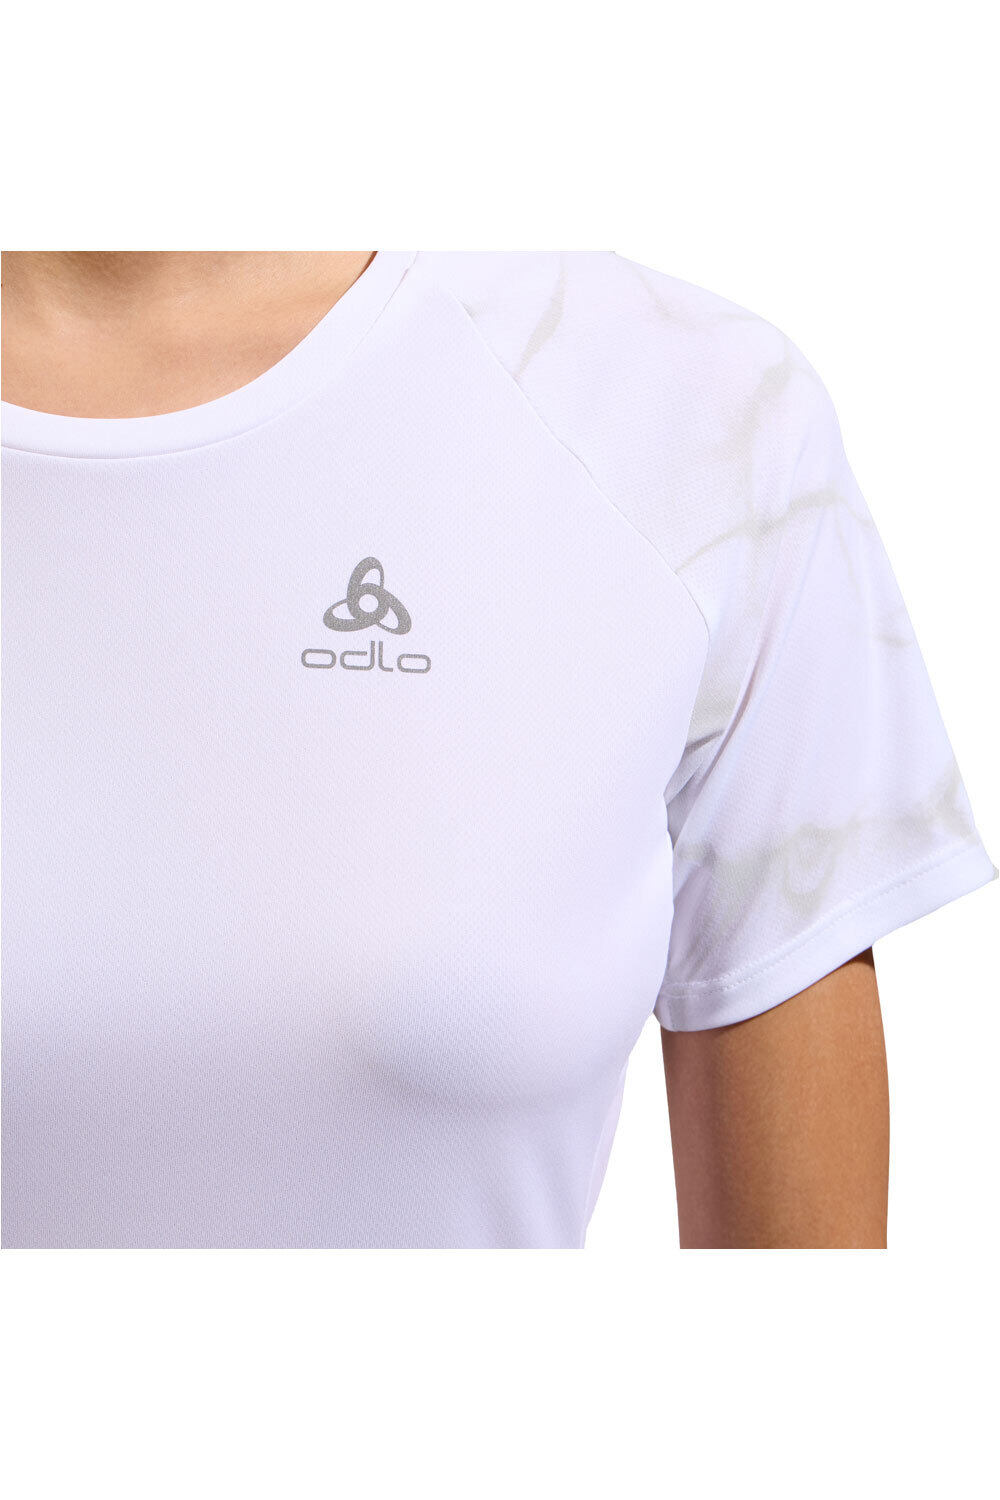 Odlo camiseta entrenamiento manga corta mujer T-shirt crew neck s/s ESSENTIAL PRINT vista detalle